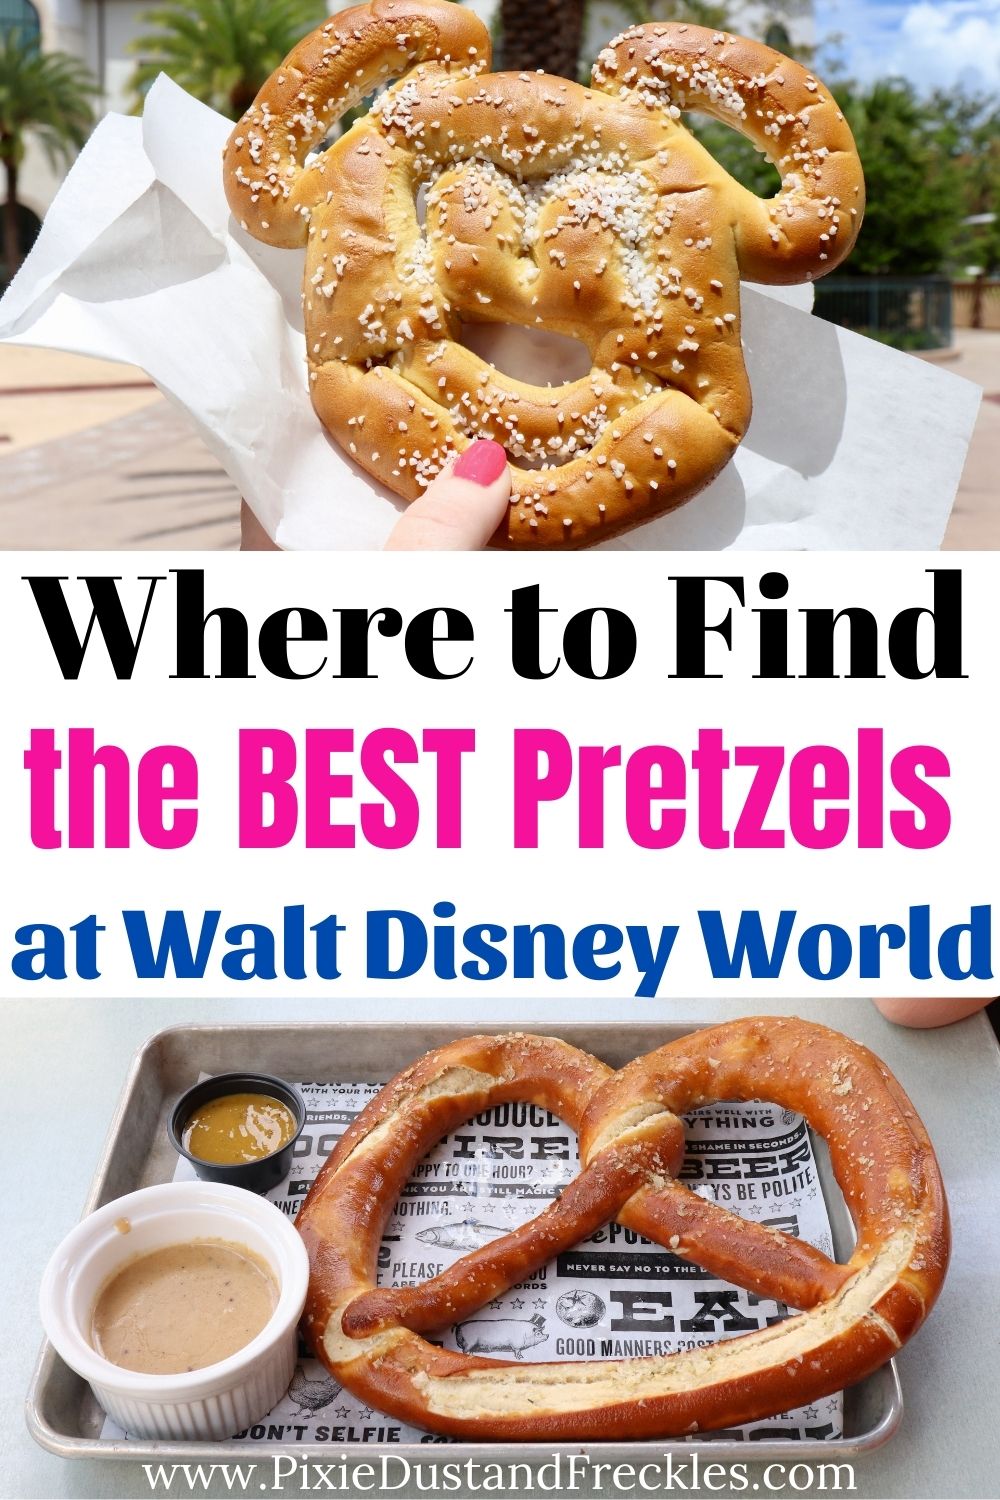 The best pretzels at Walt Disney World 